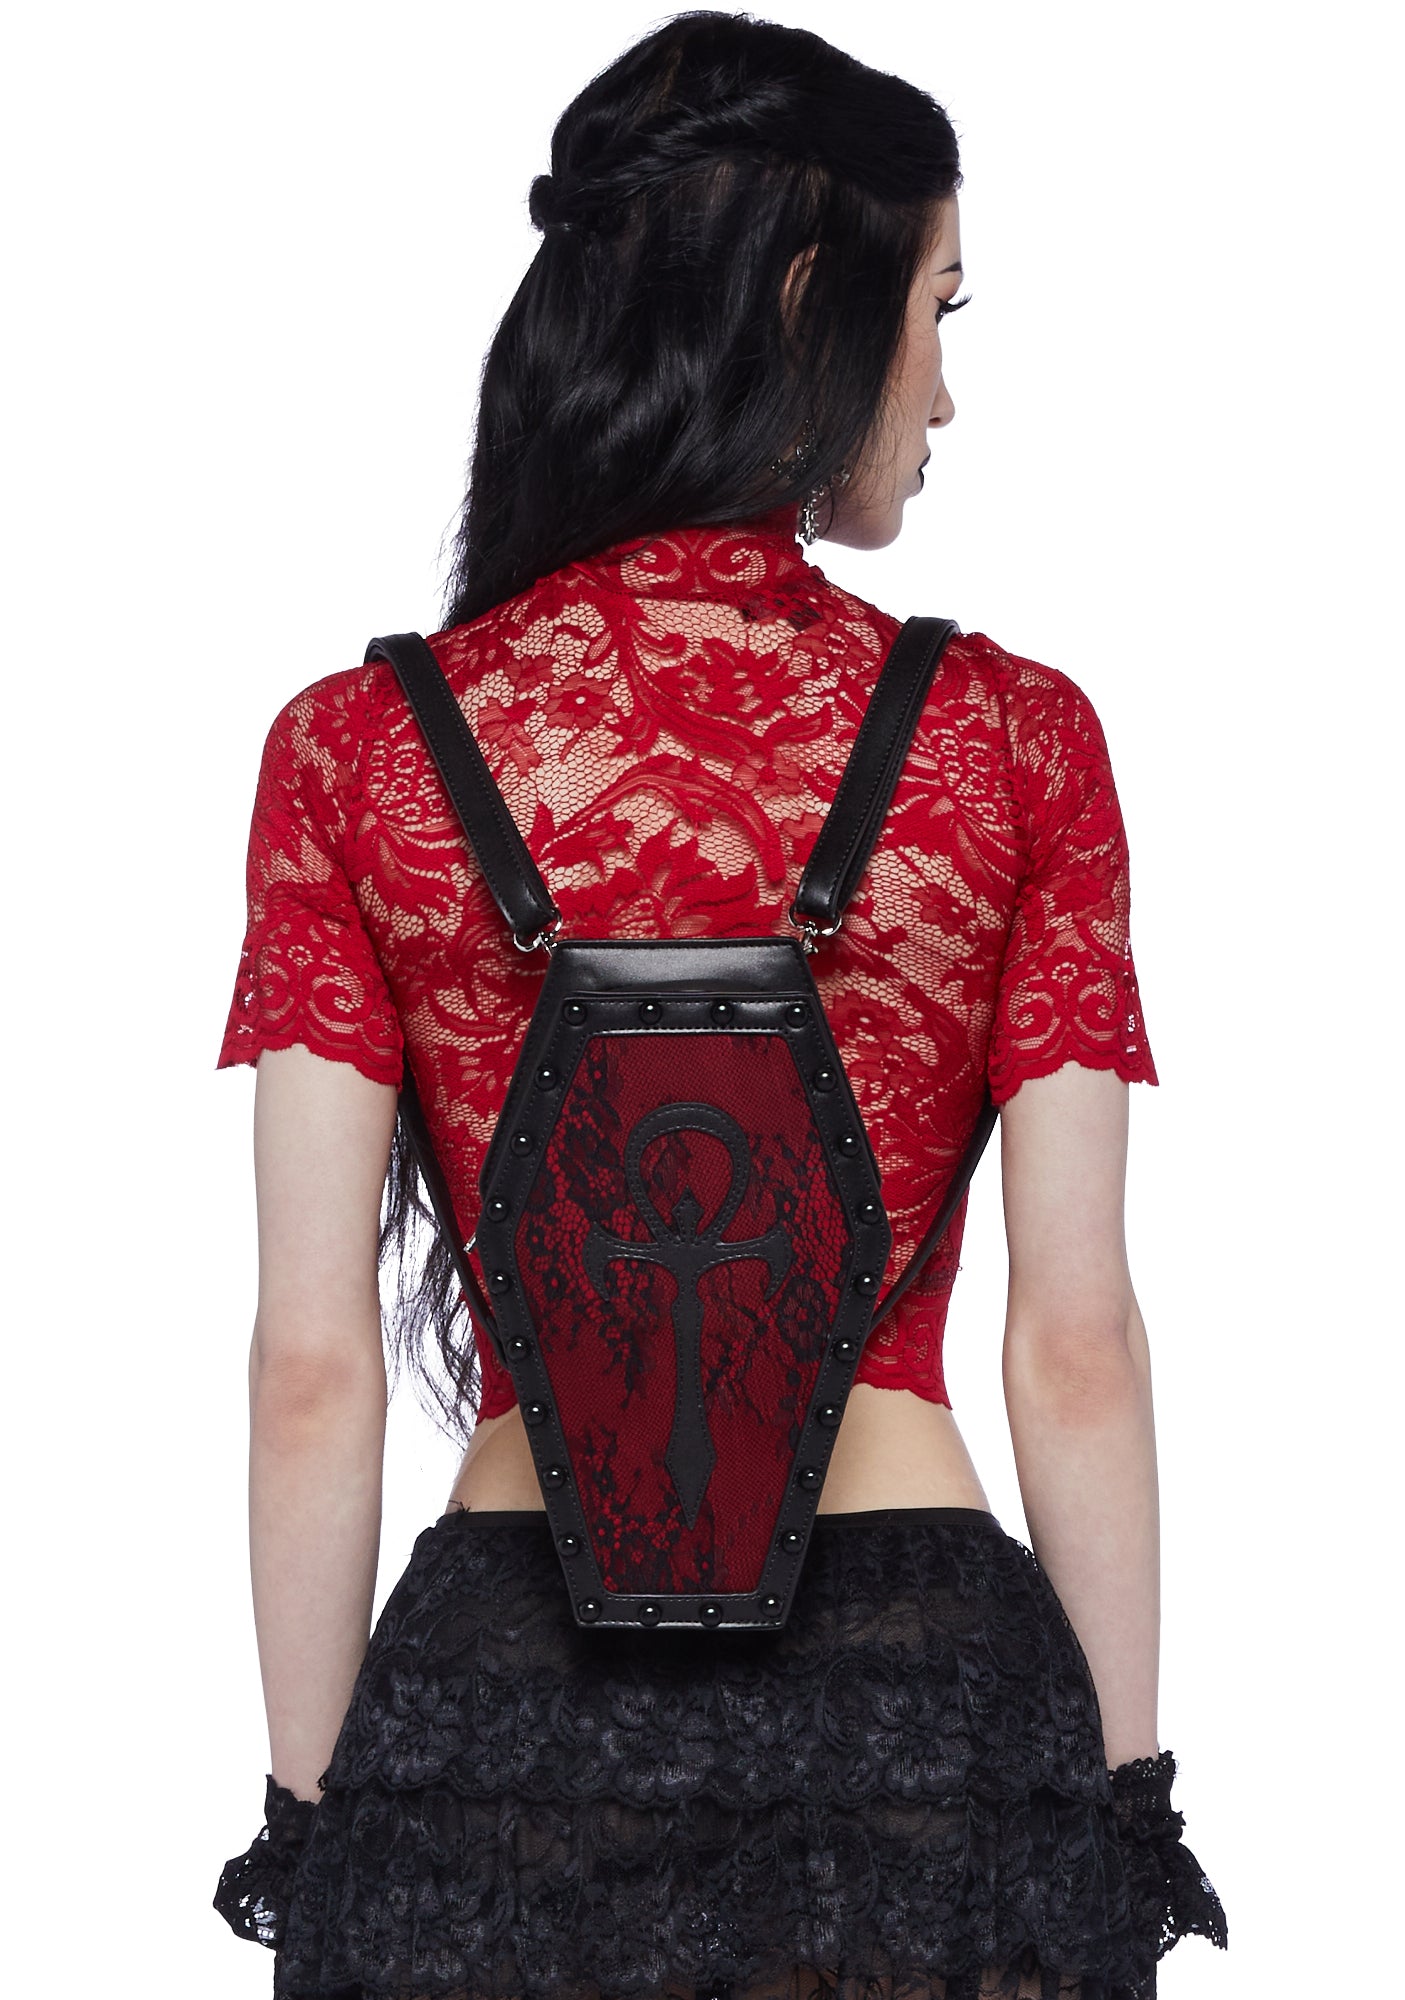 Widow Ankh Symbol Coffin Crossbody Bag Backpack - Black/Red